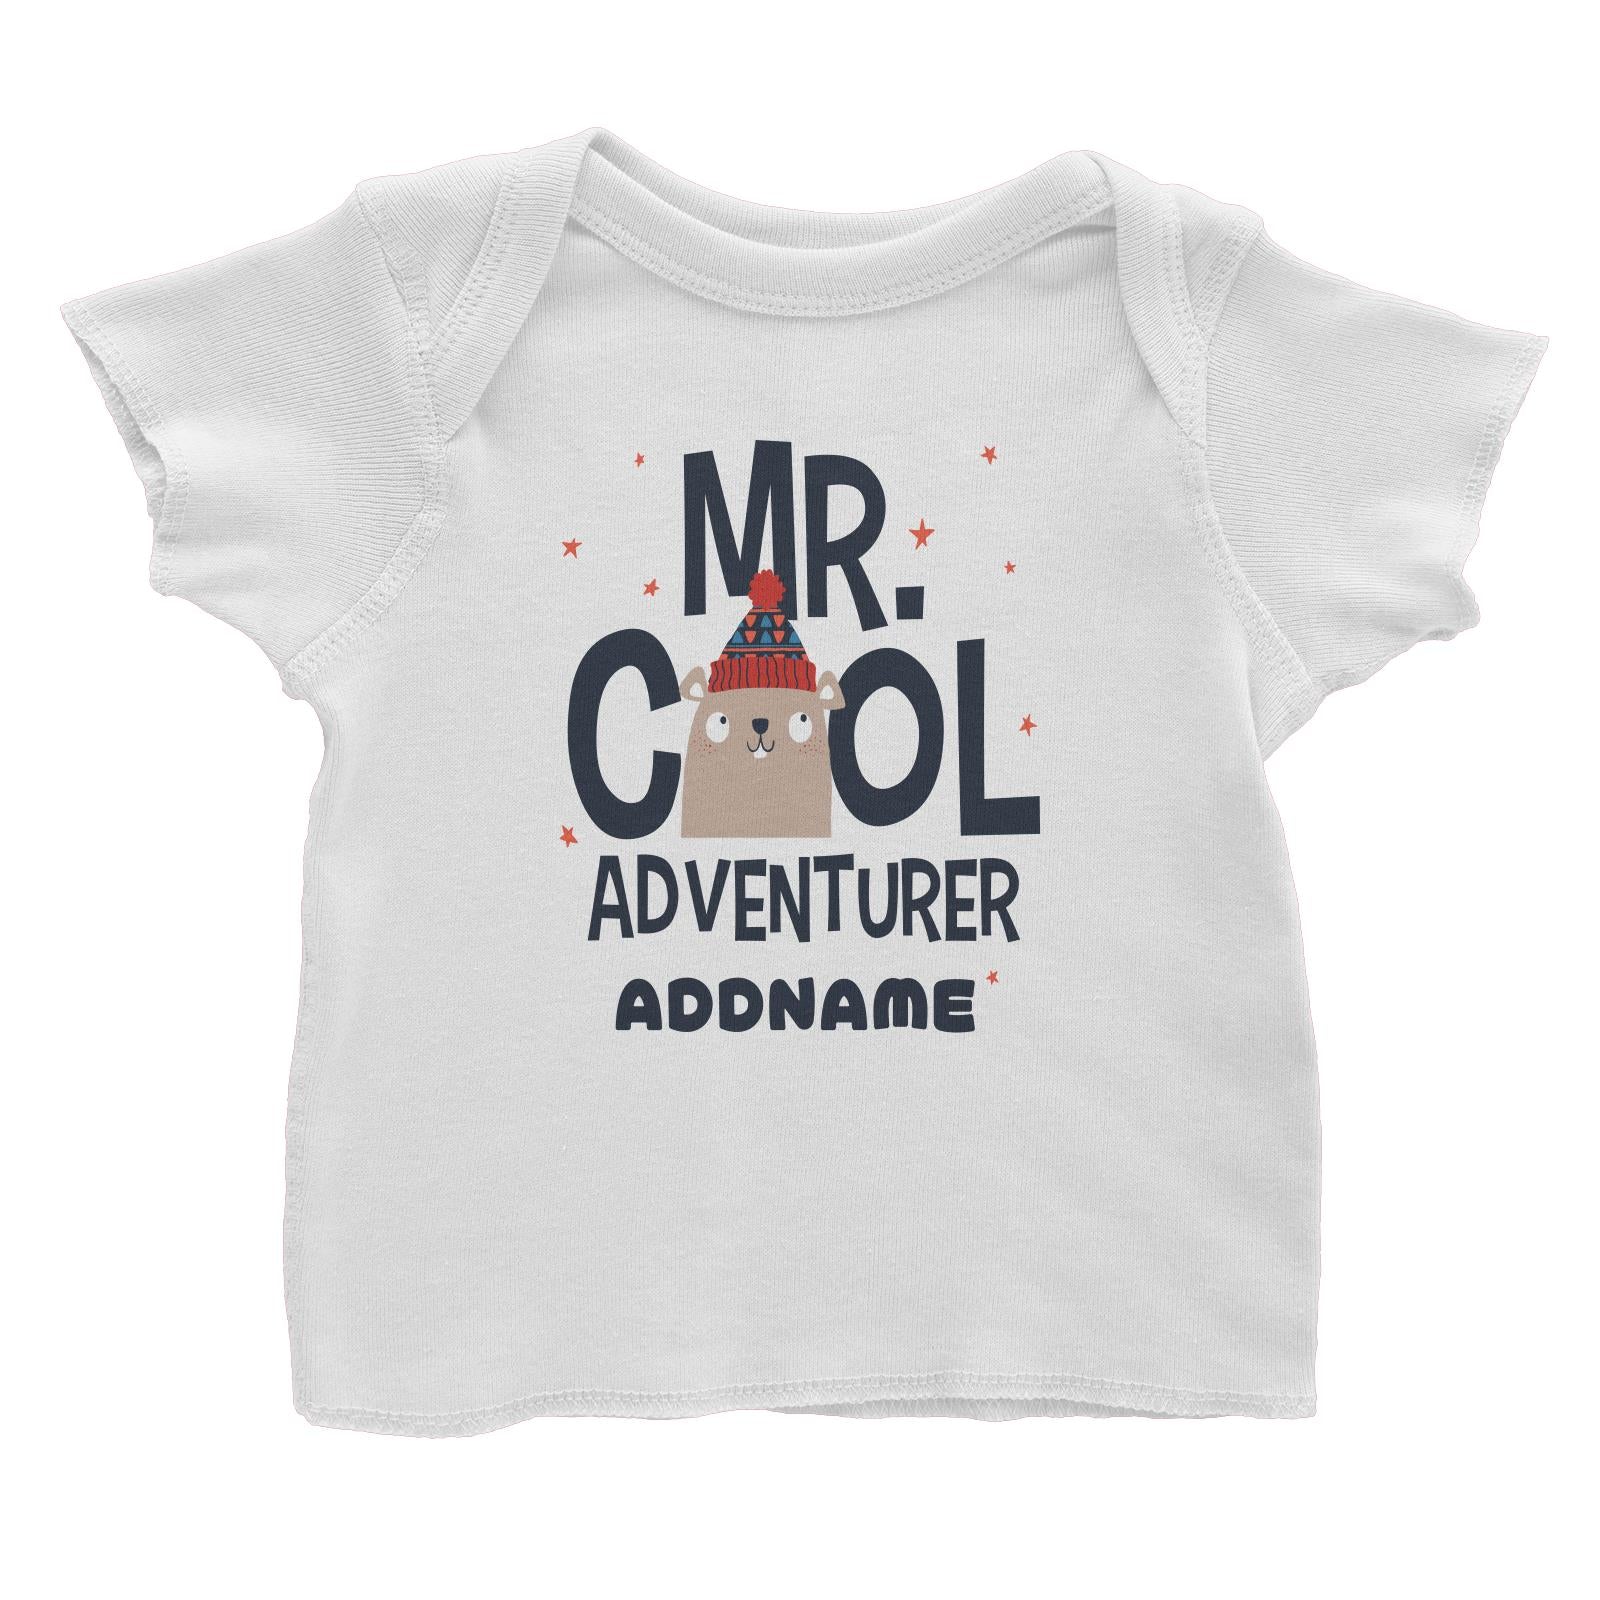 Mr Cool Adventurer Beaver Addname White Baby T-Shirt